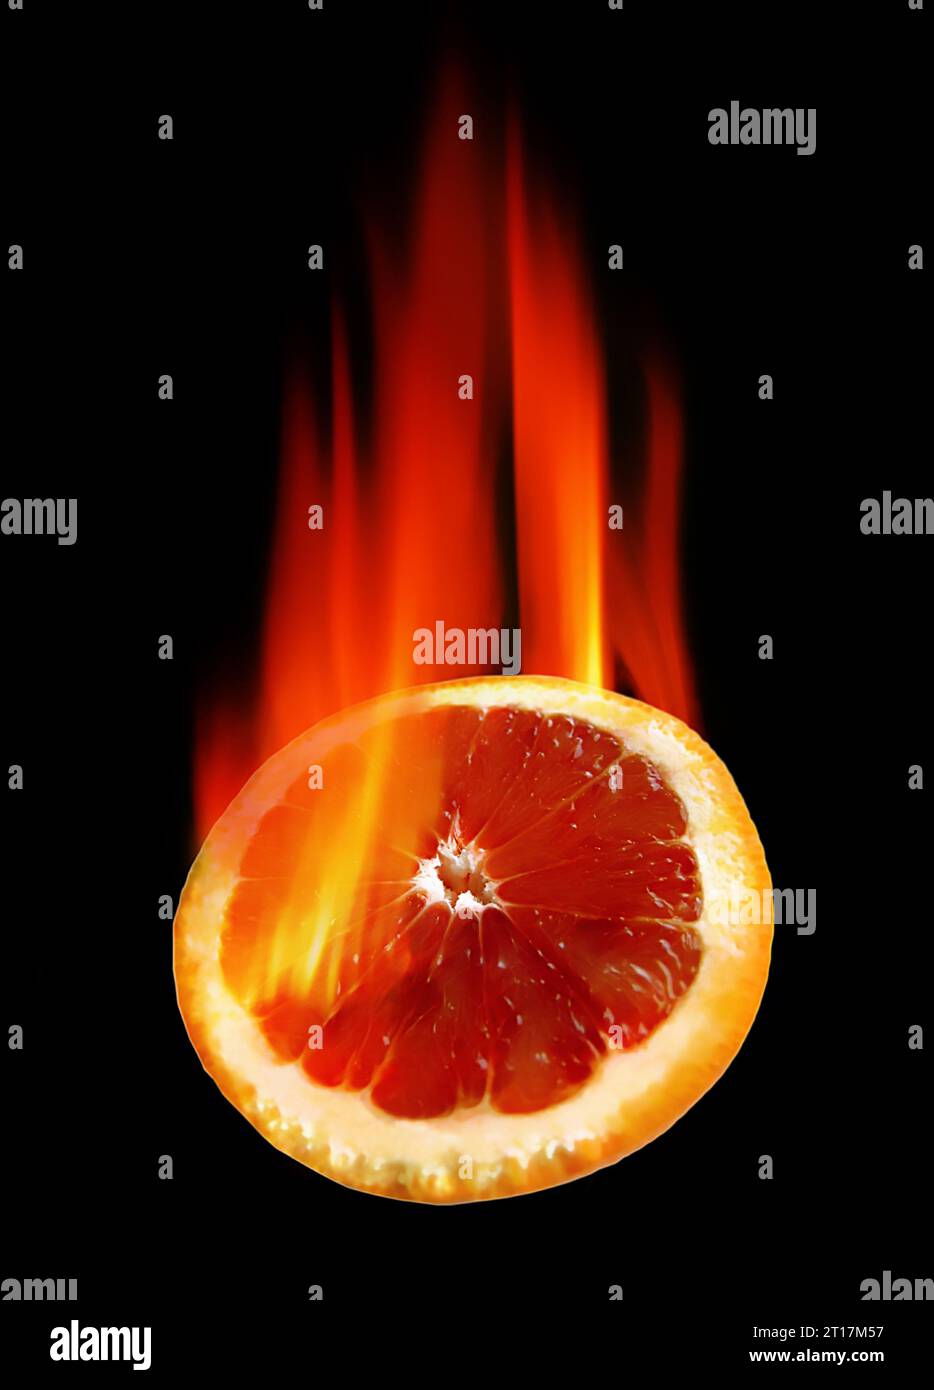 burning orange in hot fire on black background Stock Photo